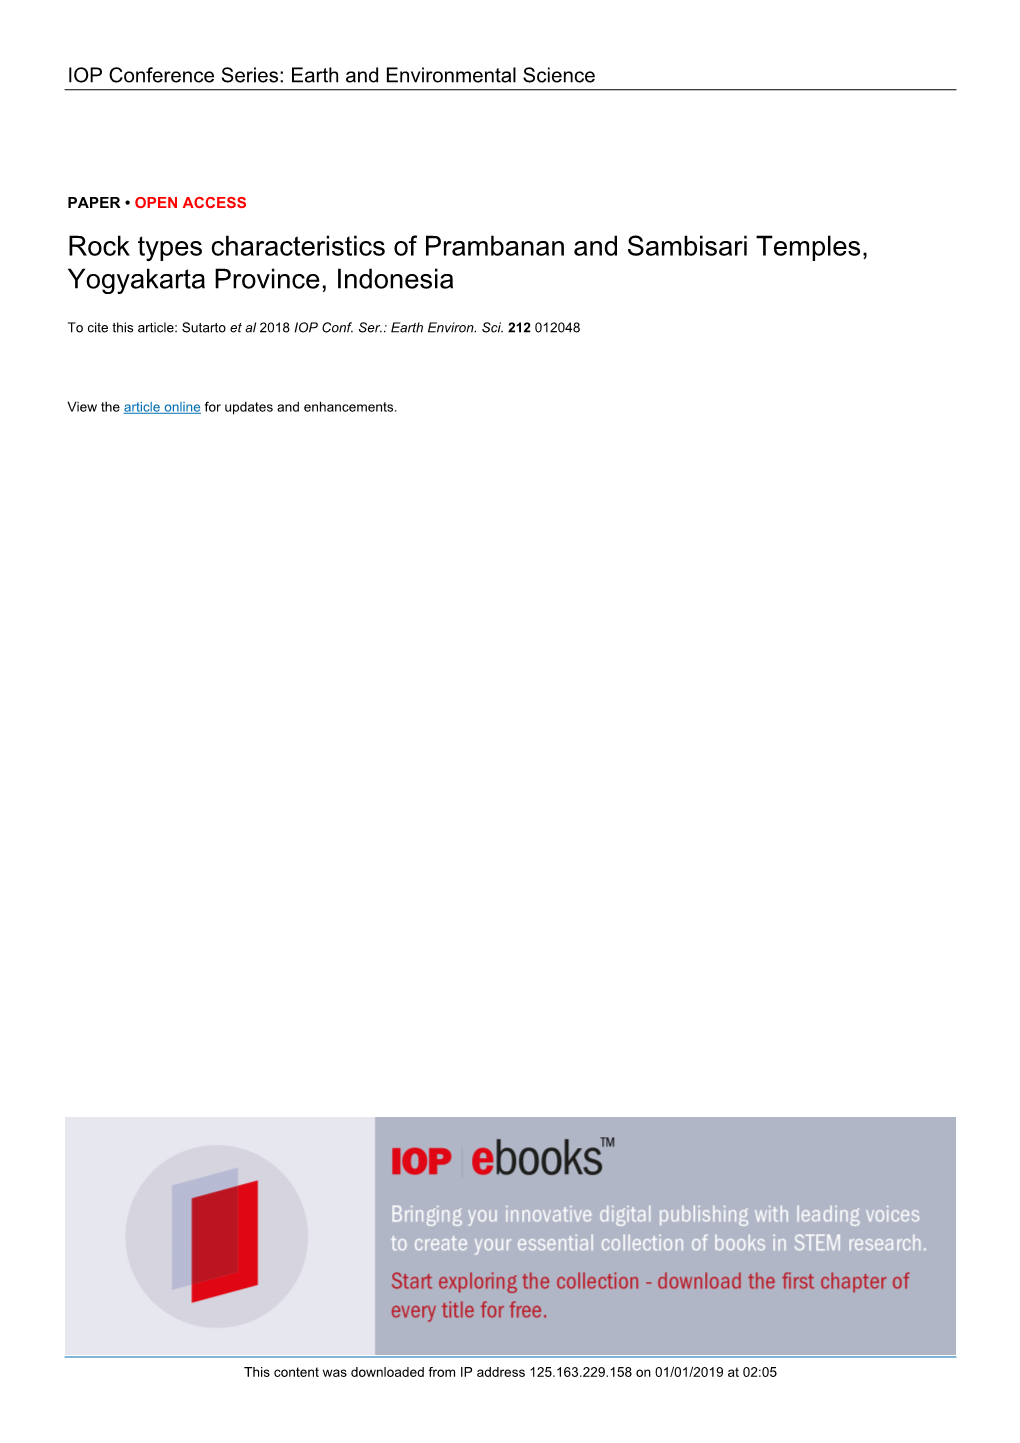 Rock Types Characteristics of Prambanan and Sambisari Temples, Yogyakarta Province, Indonesia